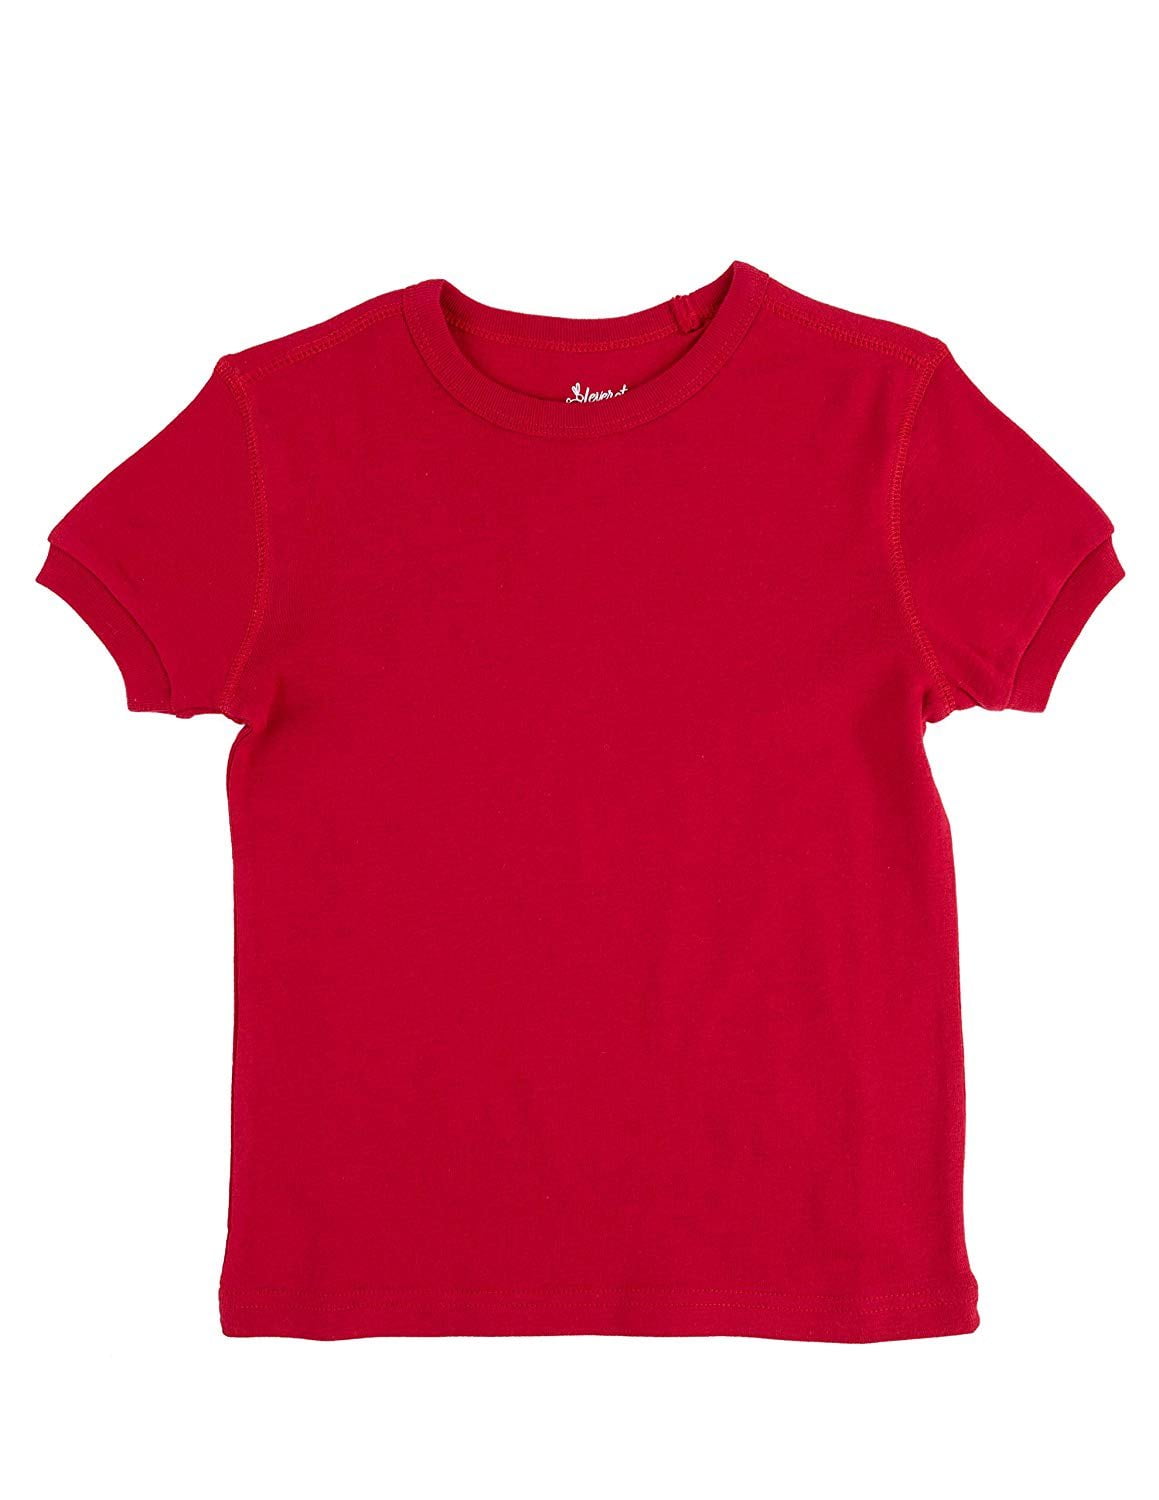 Kids Childrens Childs Boys Girls Plain RED Cotton Short Sleeve T-Shirt Tee Shirt 